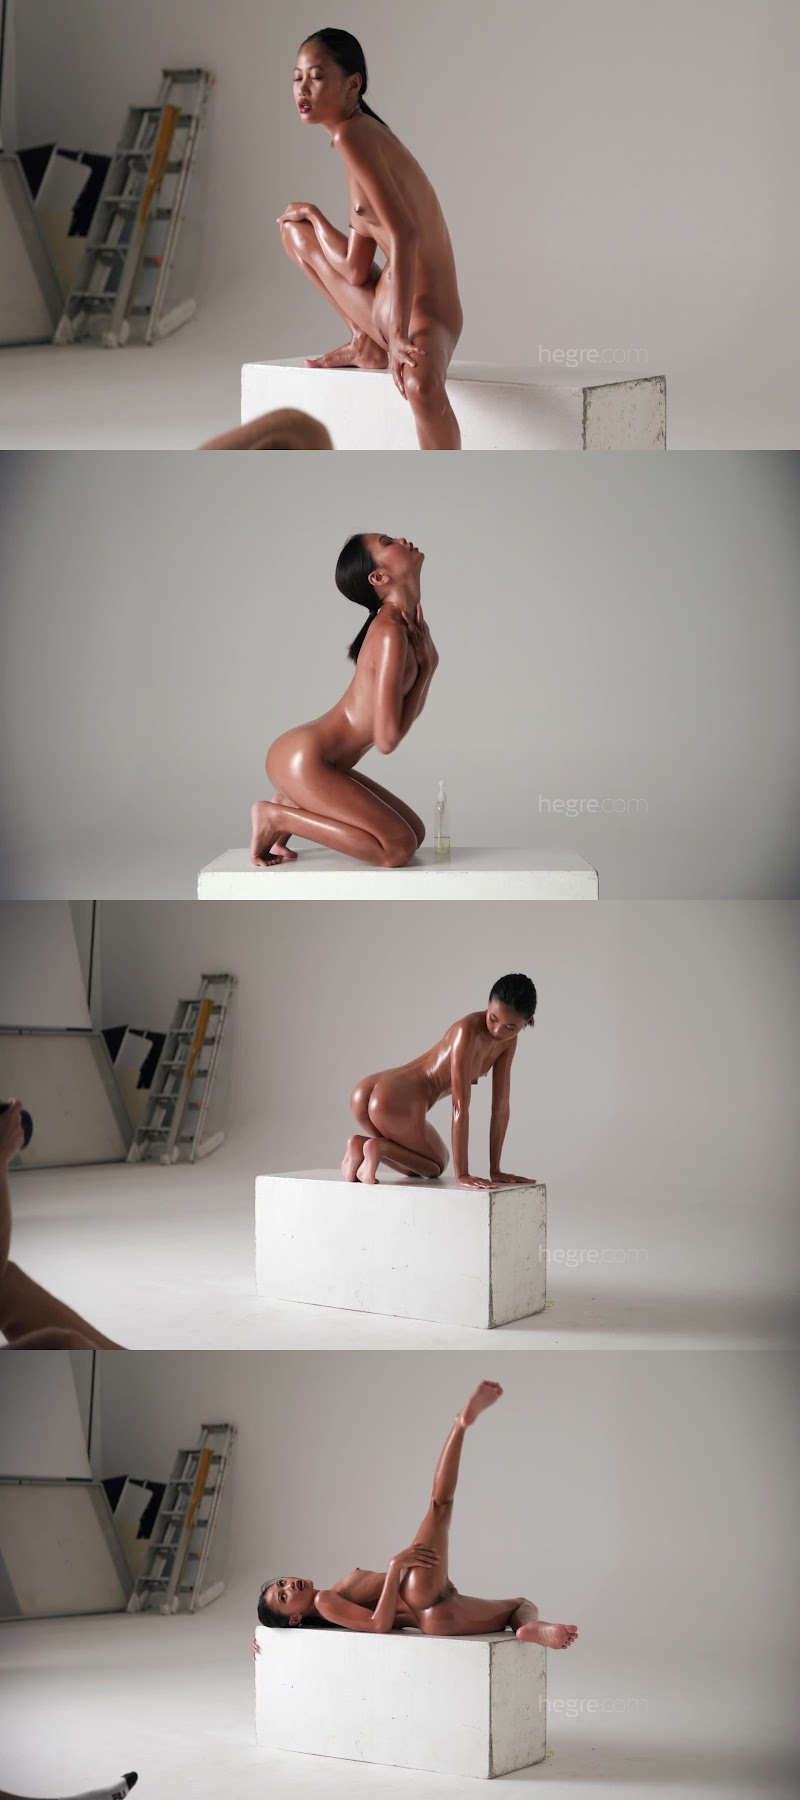 [Art] Hiromi - Nude Modeling art 12300 